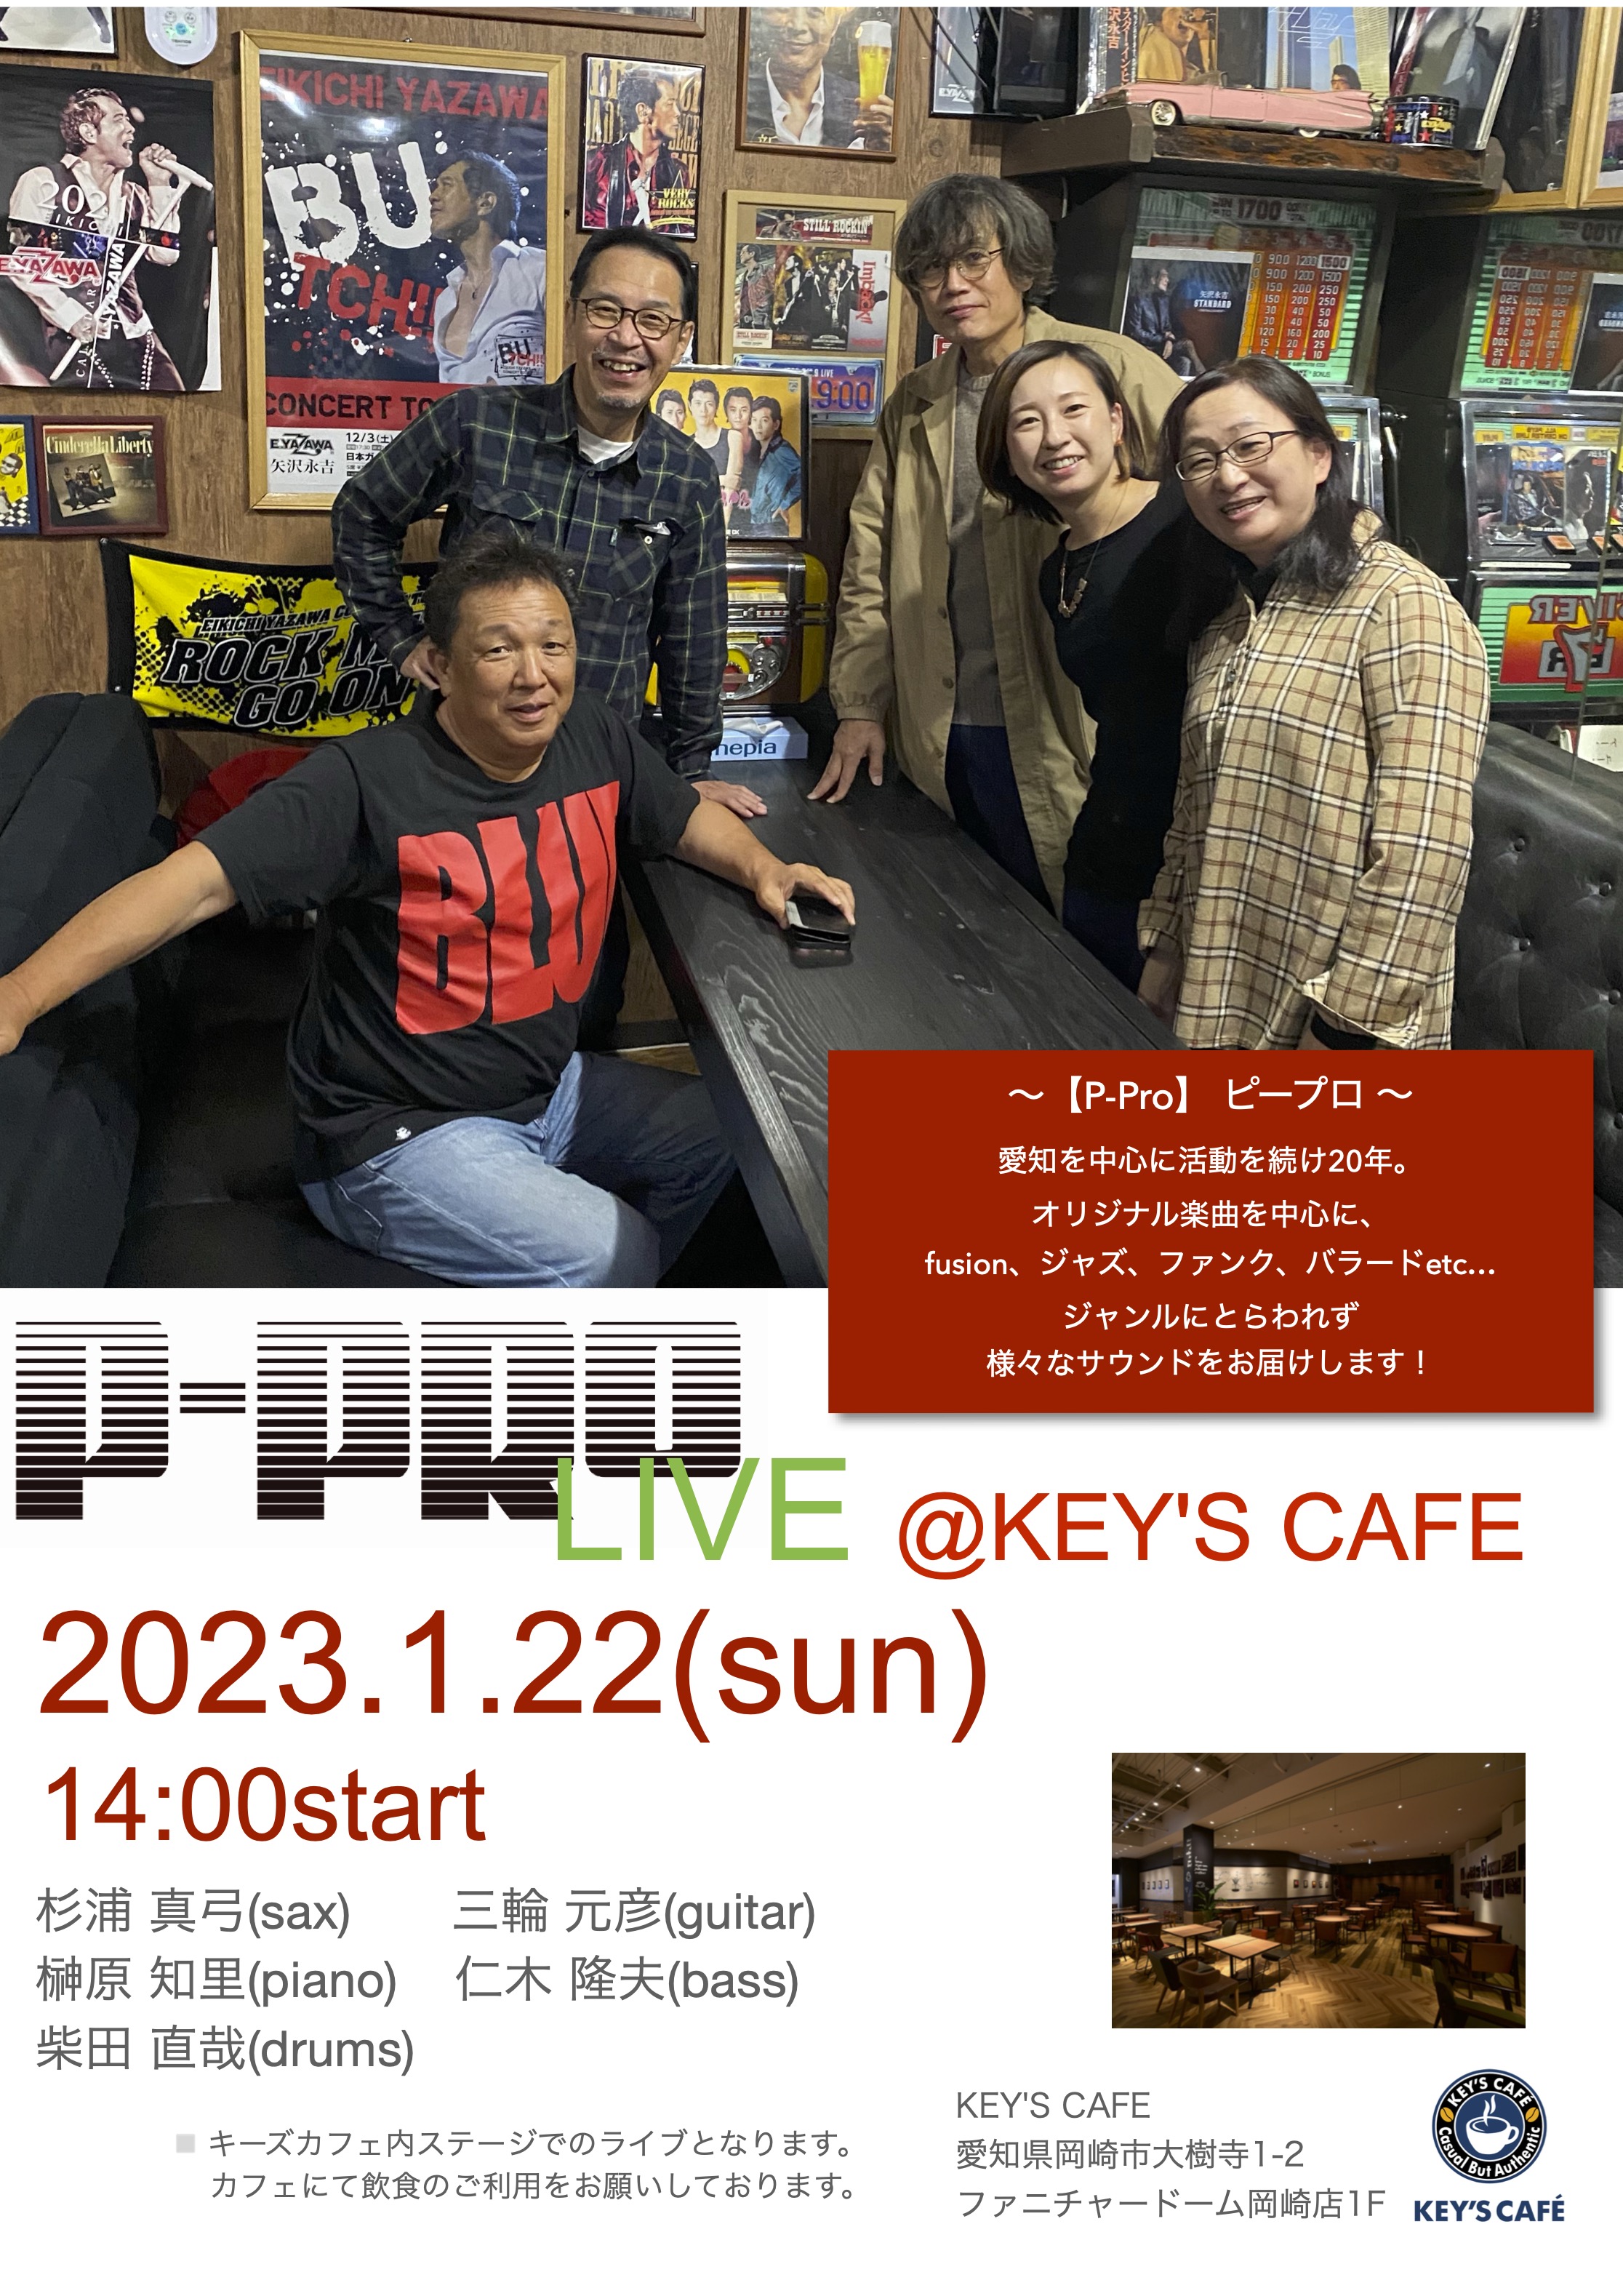 KEY’S CAFÉ　ライブイベント開催のご案内　1月22日(日)